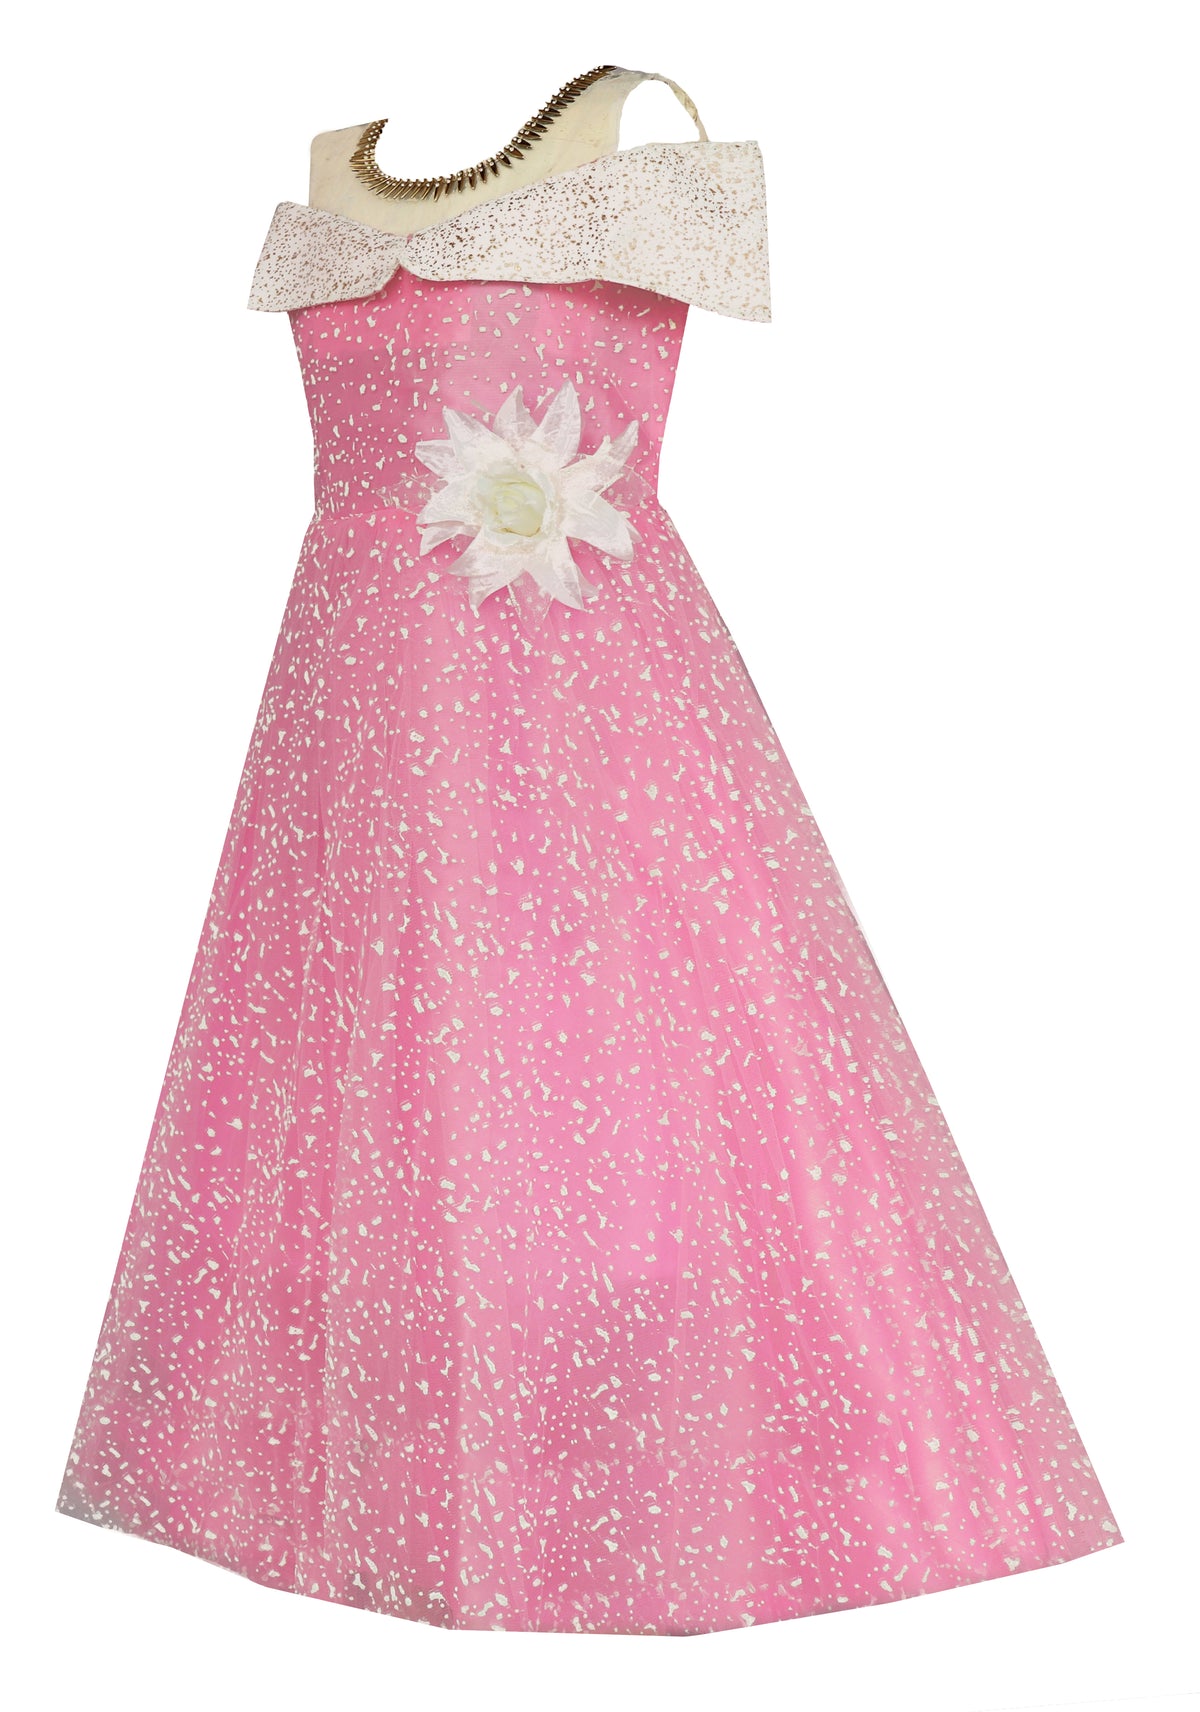 My Lil Princess Pink Polka Dress Side View